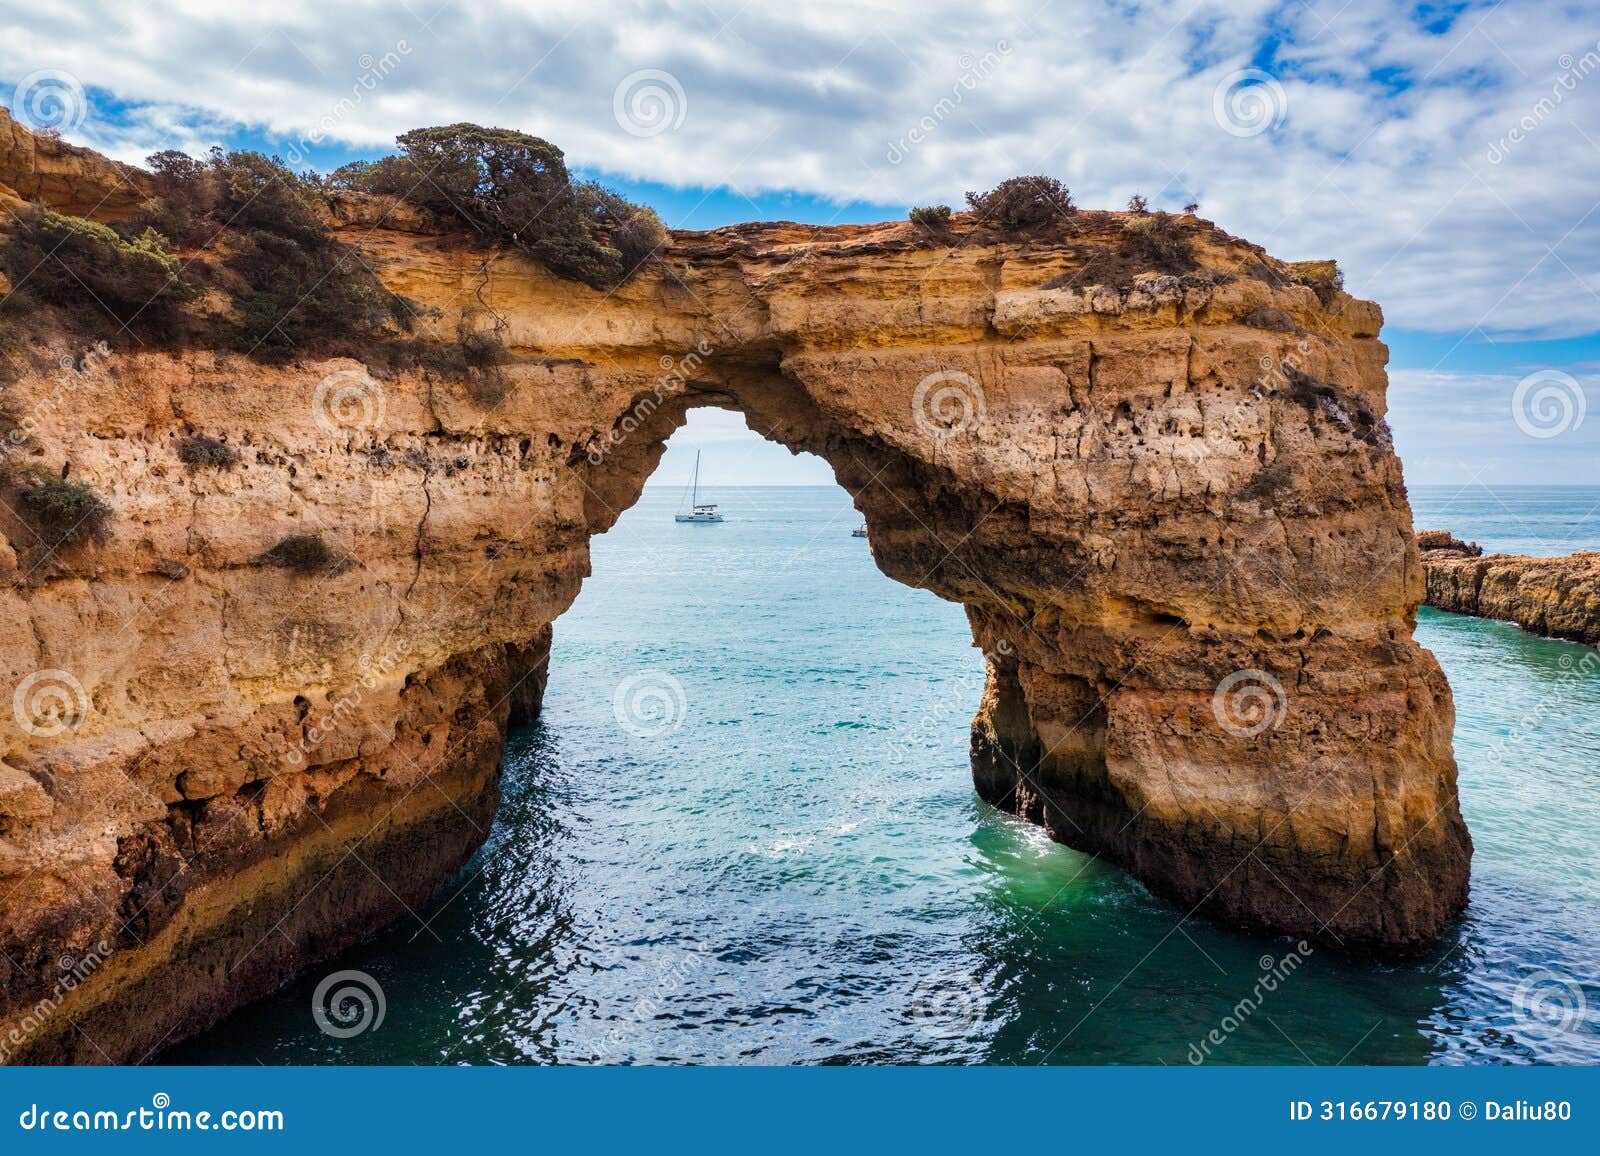 natural arch above ocean, arco de albandeira, algarve, portugal. stone arch at praia de albandeira, lagoa, algarve, portugal. view